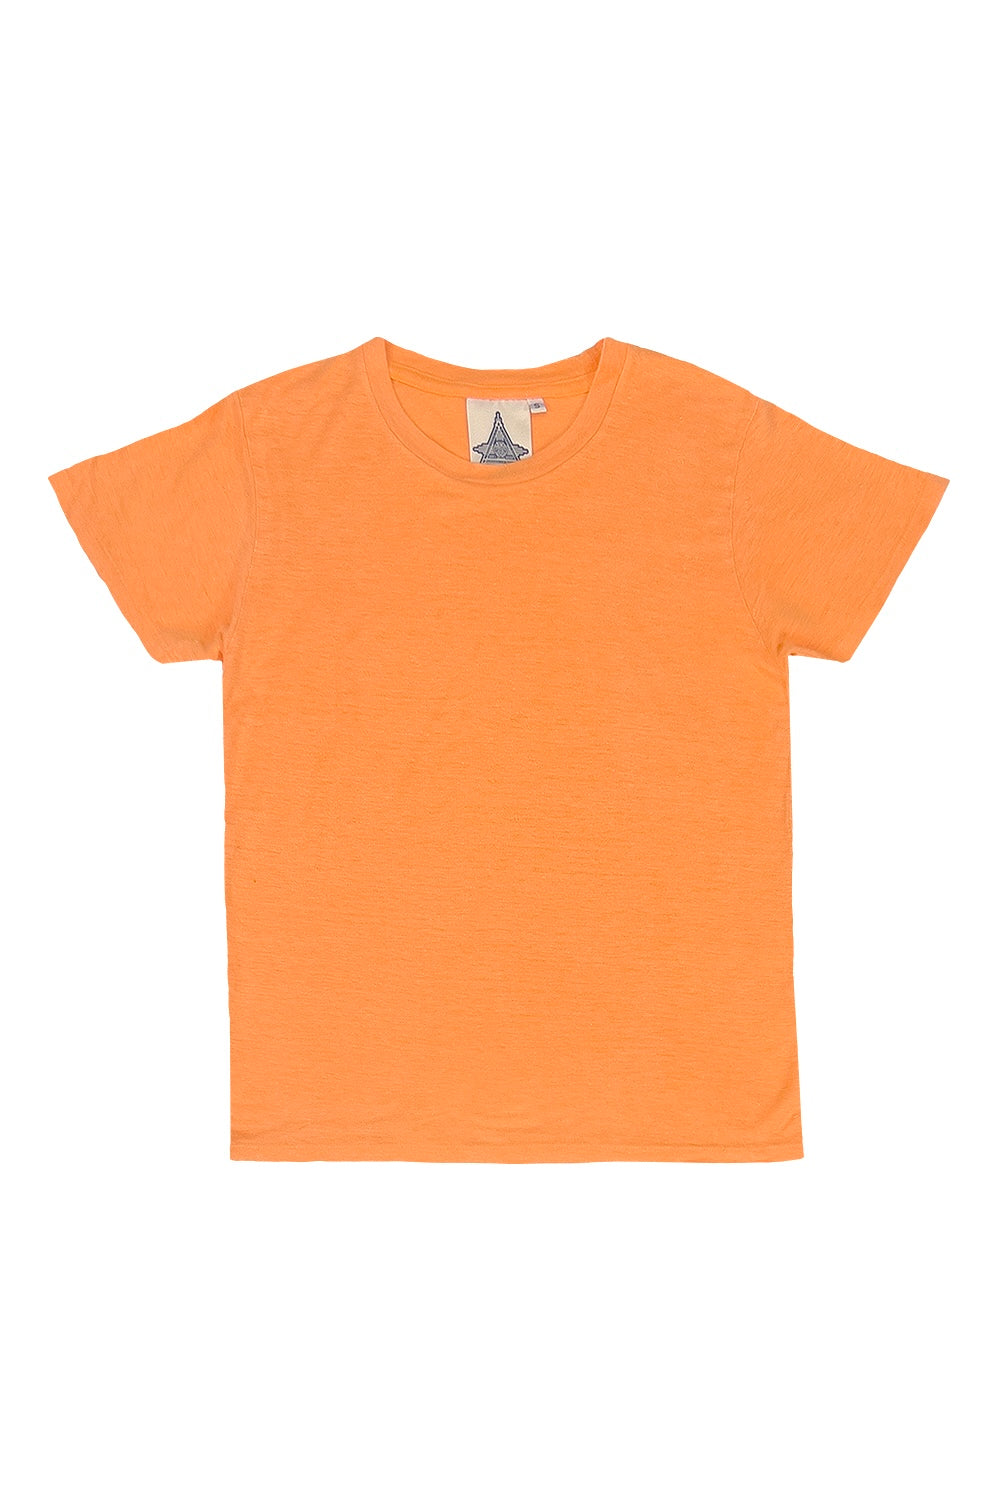 Madison 100% Hemp Tee | Jungmaven Hemp Clothing & Accessories / Color: Apricot Crush